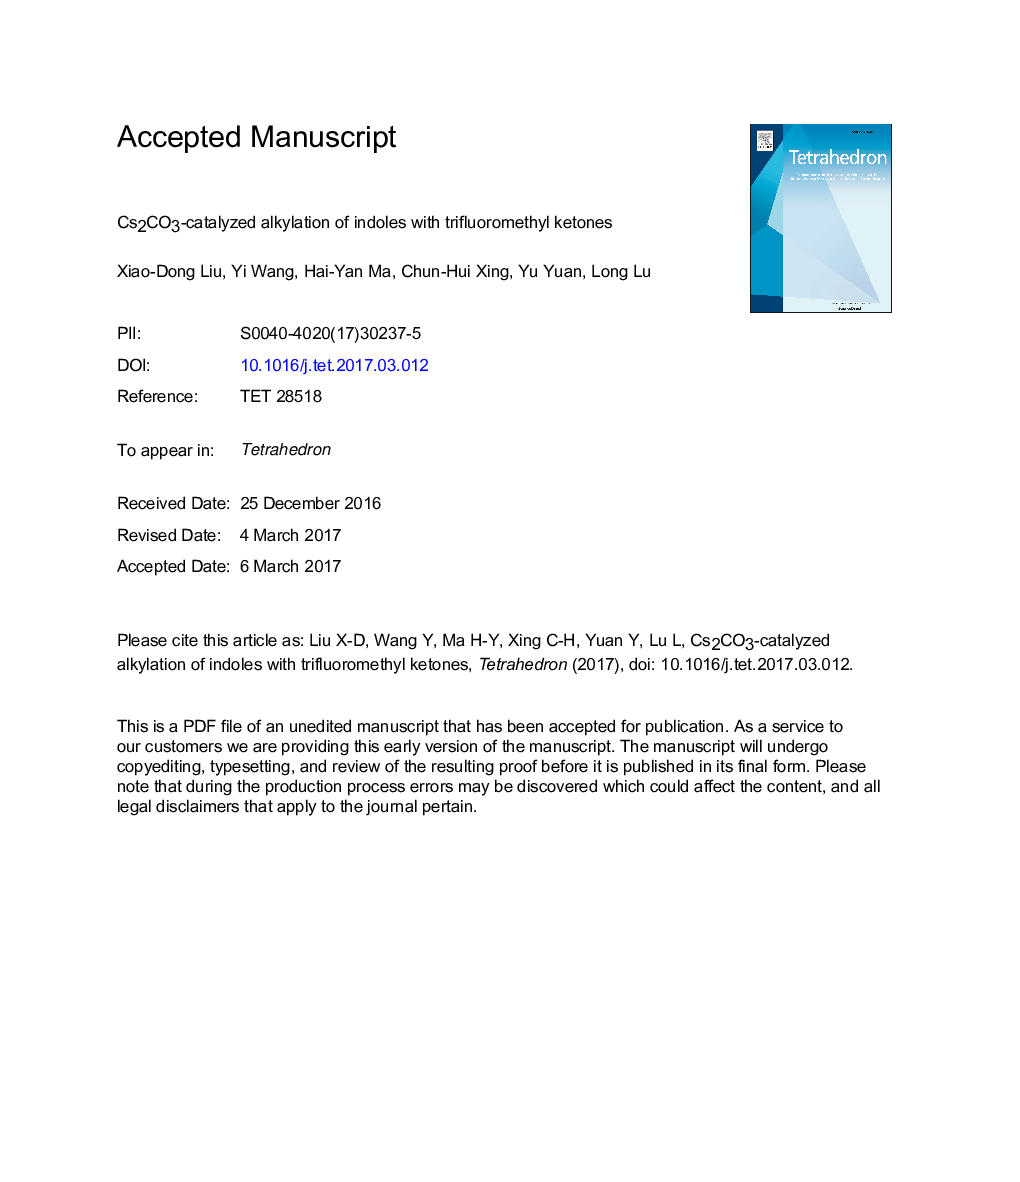 Cs2CO3-catalyzed alkylation of indoles with trifluoromethyl ketones